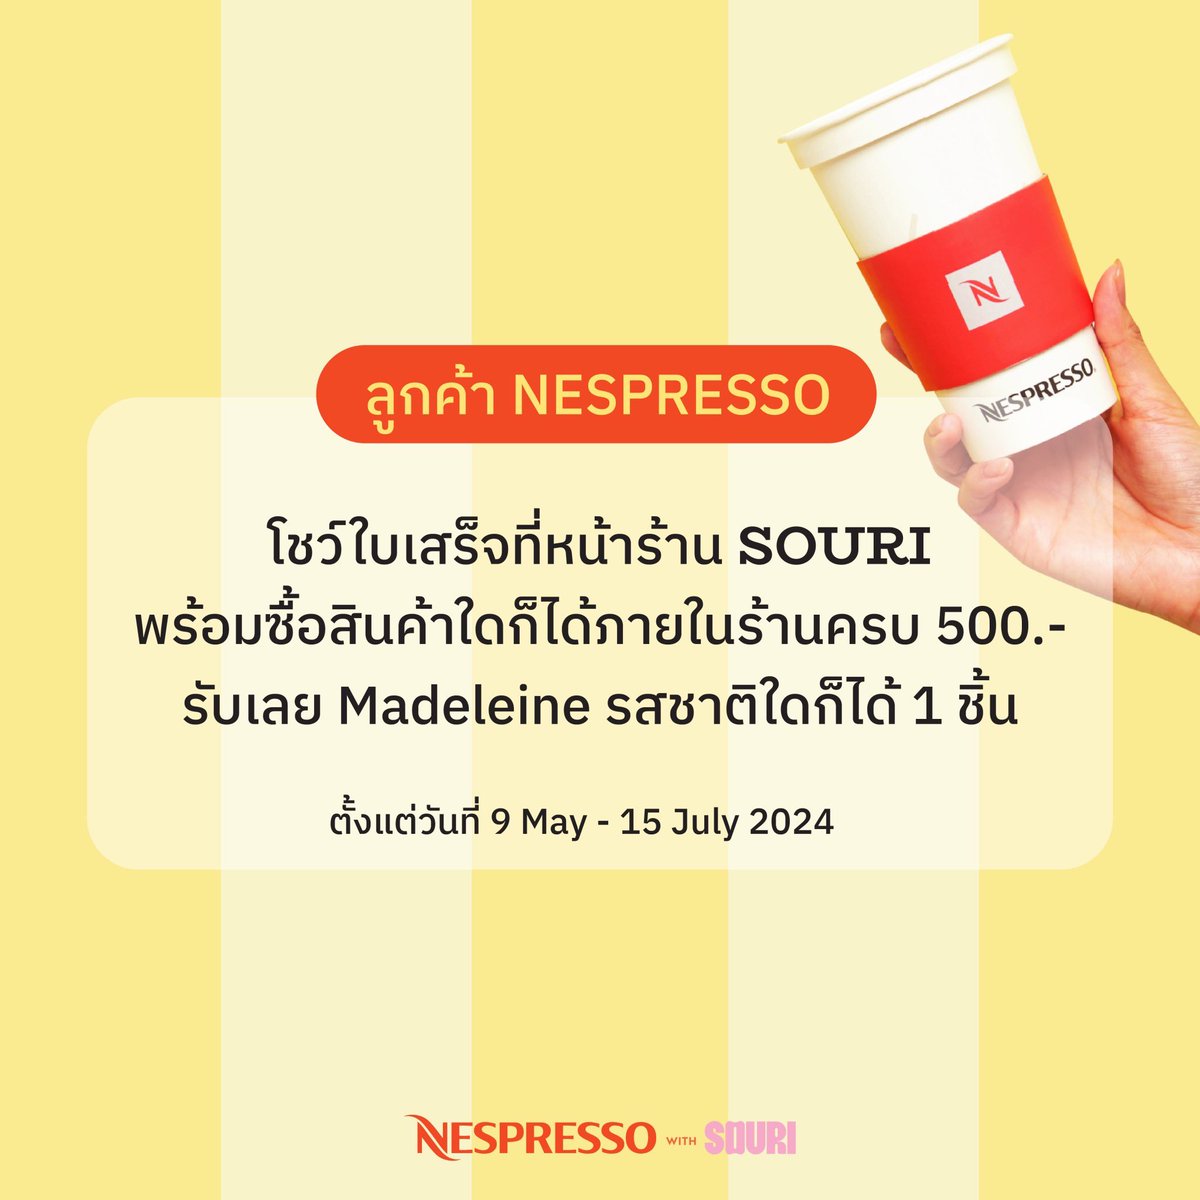 ✨ Nespresso with SOURI special offer just for you 

9 May - 15 July 2024 

#SOURI #SOURIBKK #NespressowithSOURI #NespressoTH #UnforgettableSummer #SummerwithNespresso